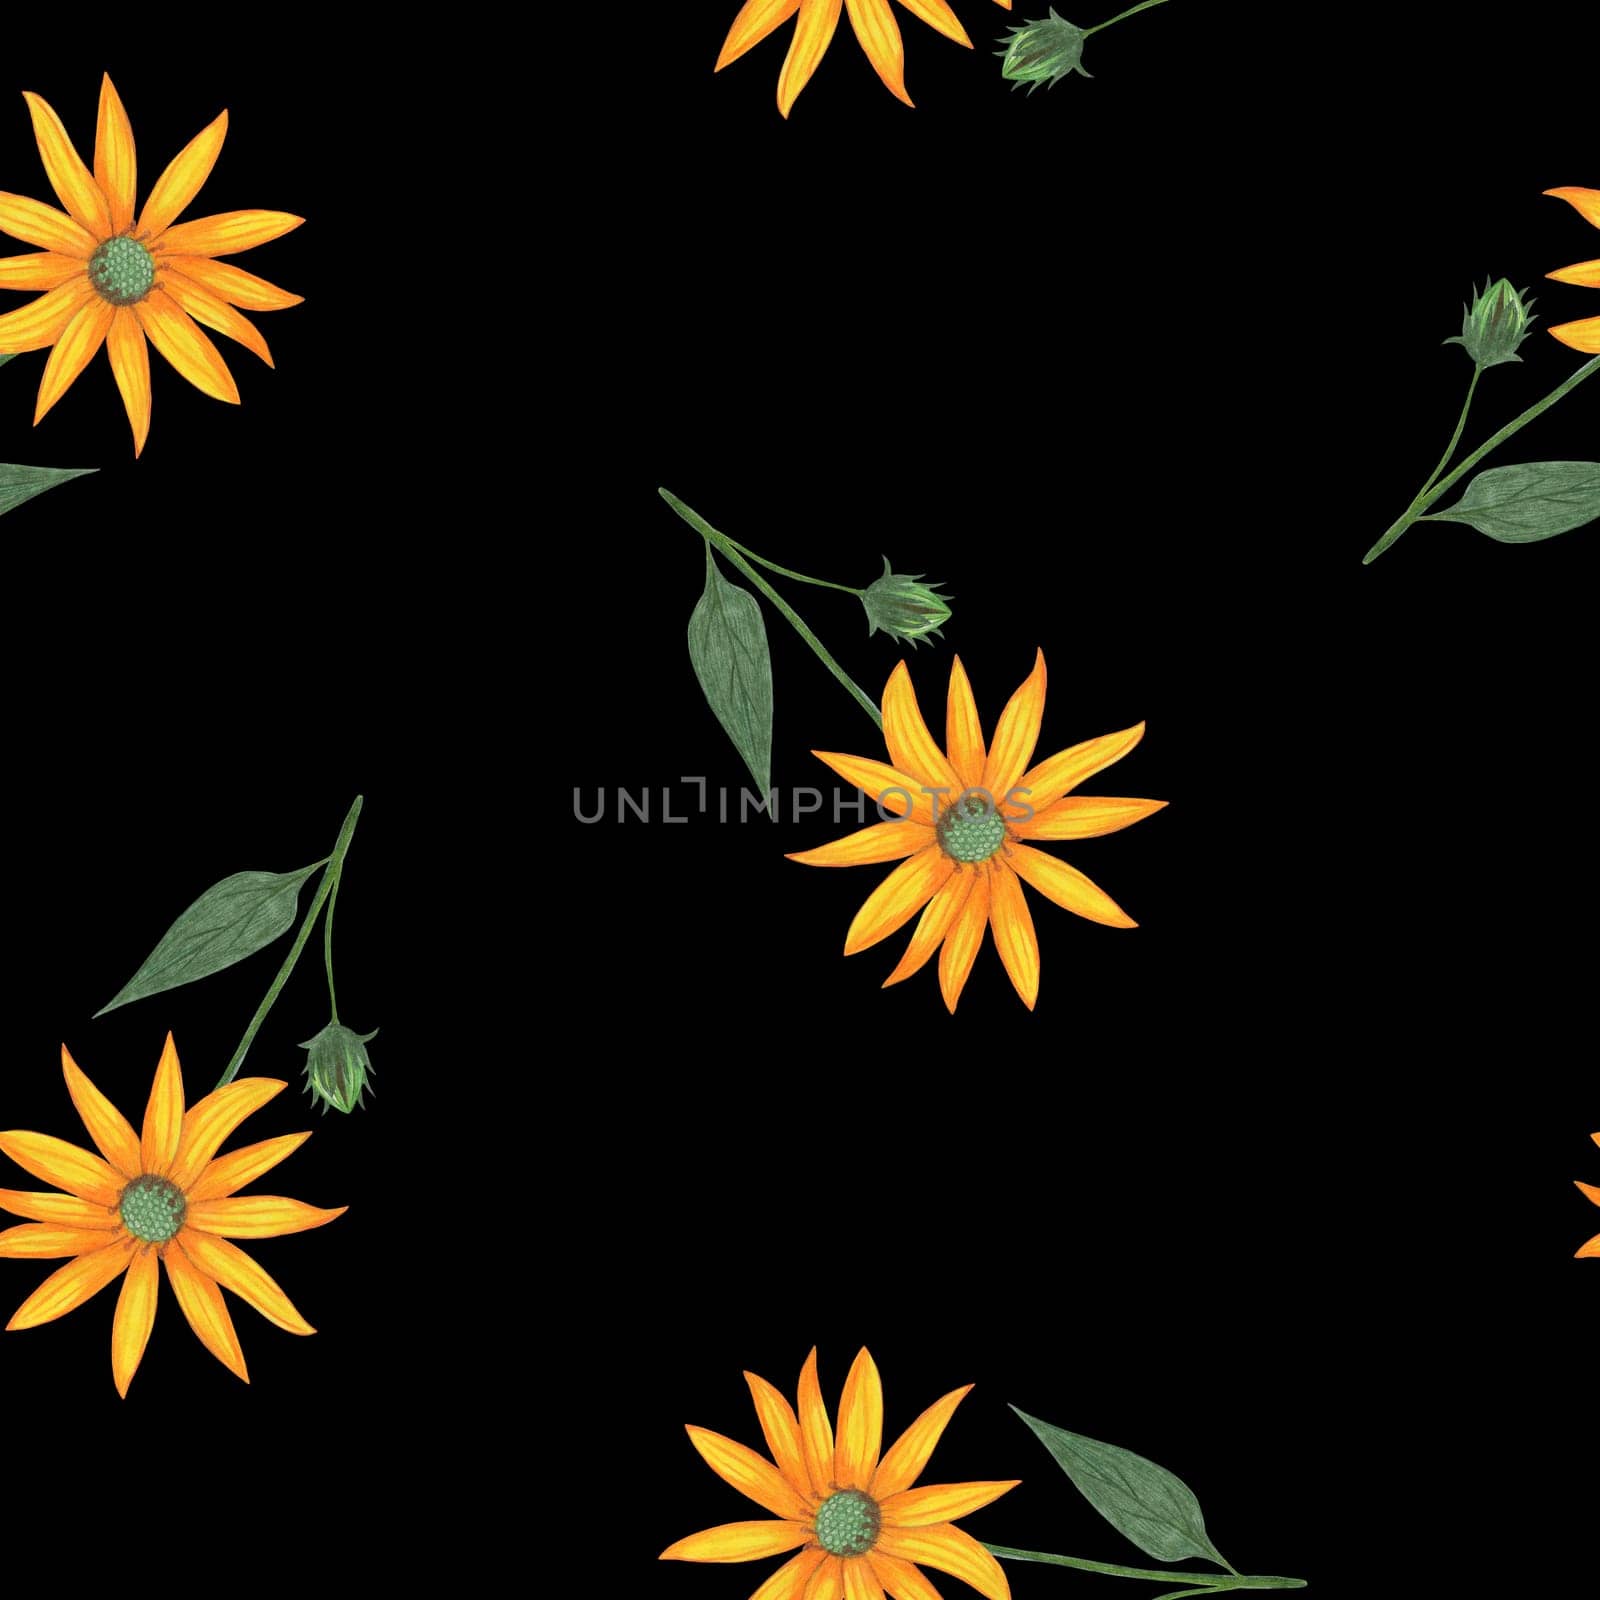 Topinambur Flower Seamless Pattern. Hand Drawn Floral Digital Paper on Black Background.